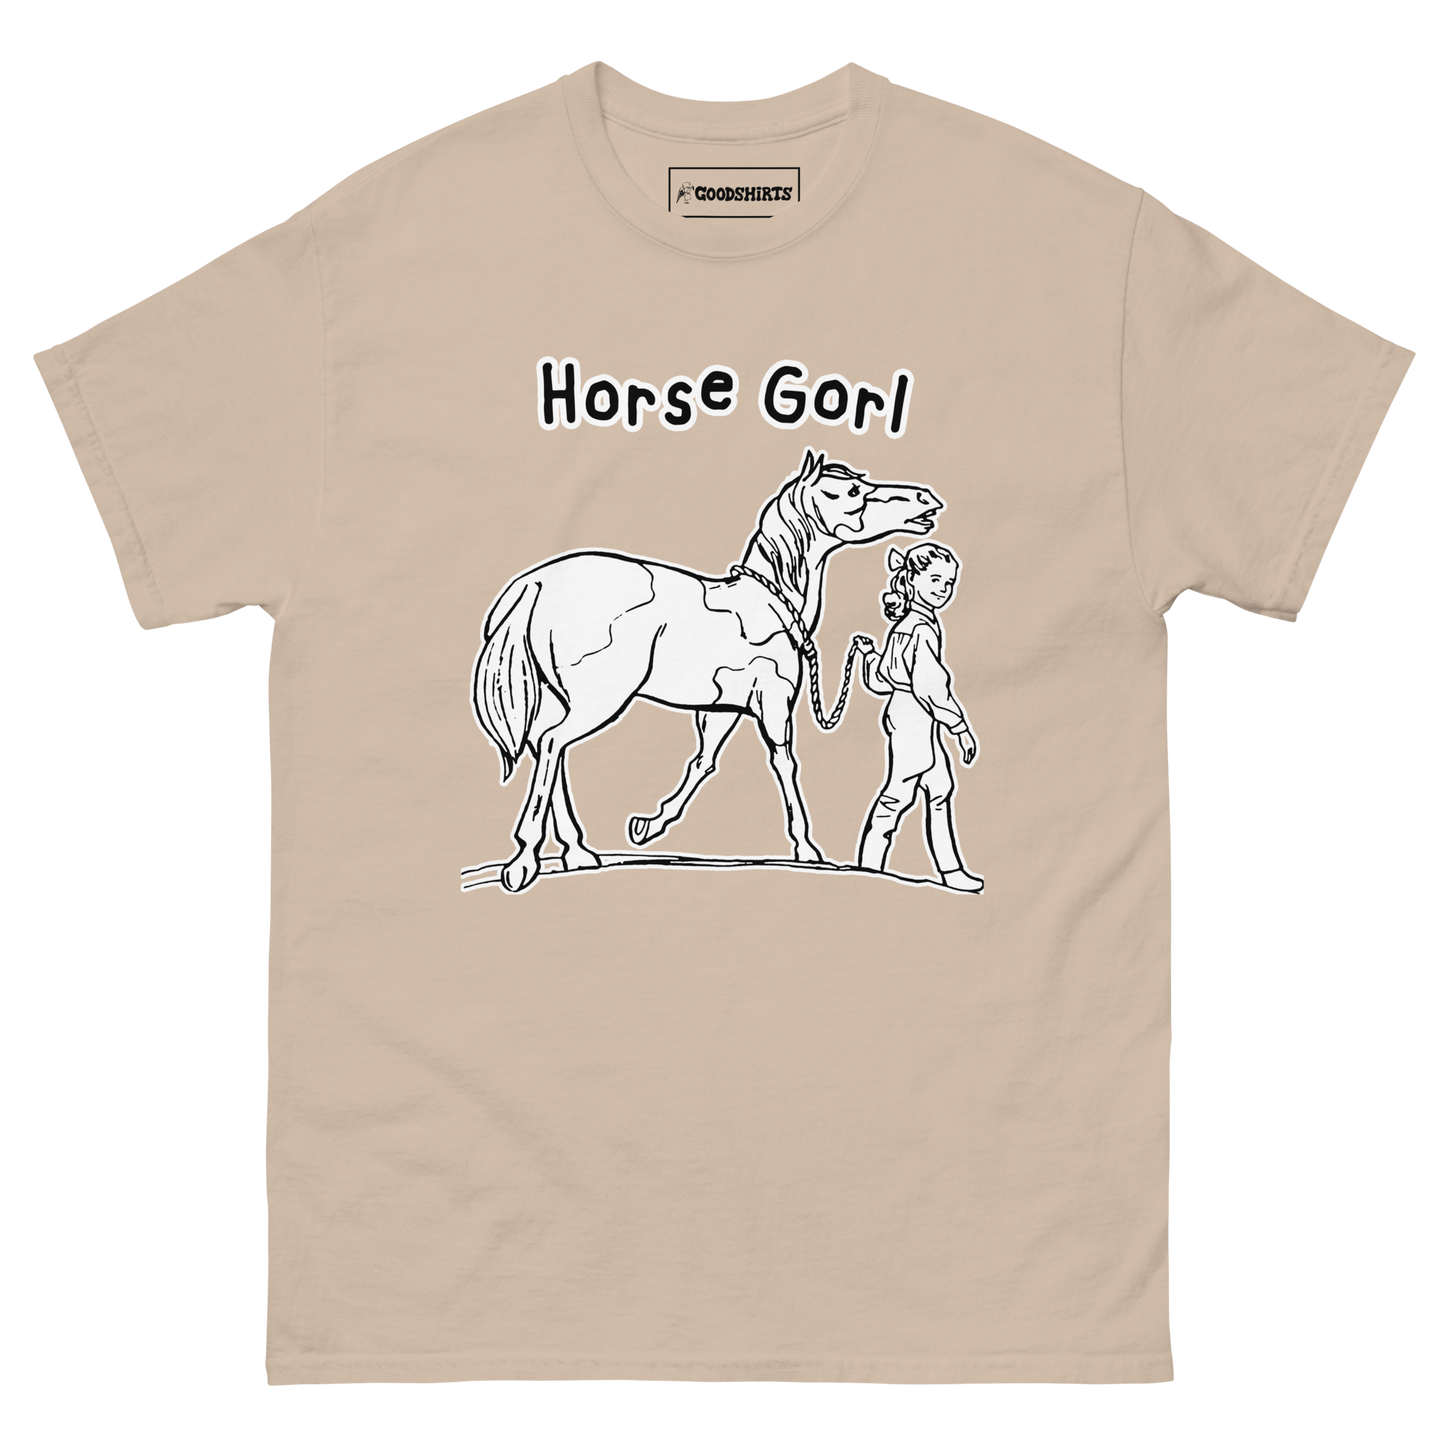 Horse Gorl.